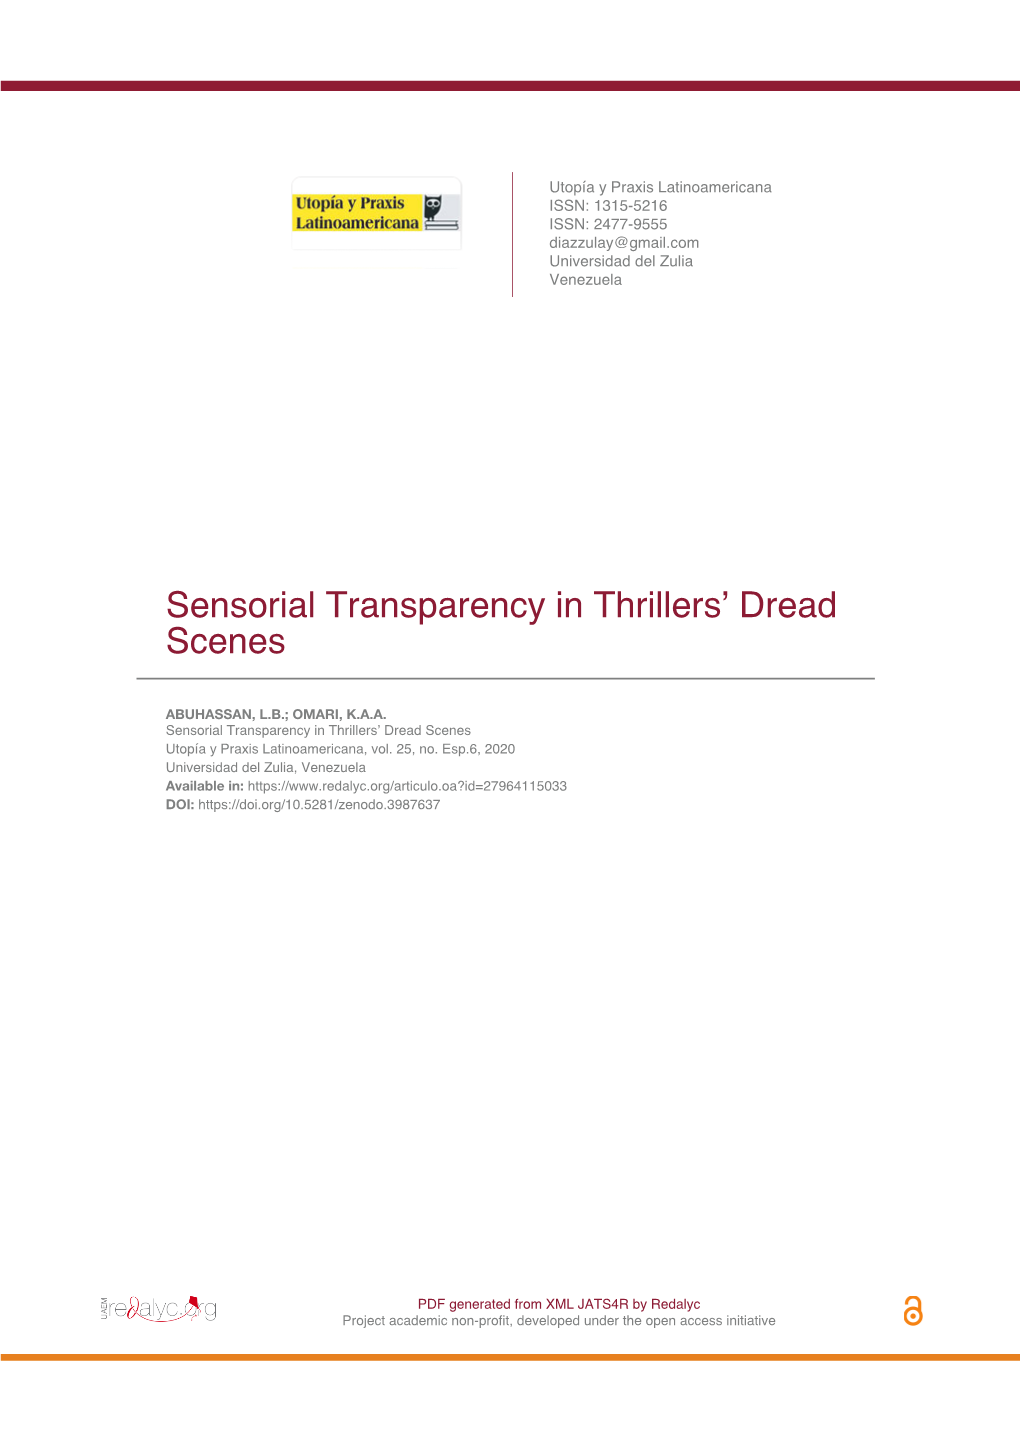 Sensorial Transparency in Thrillers' Dread Scenes